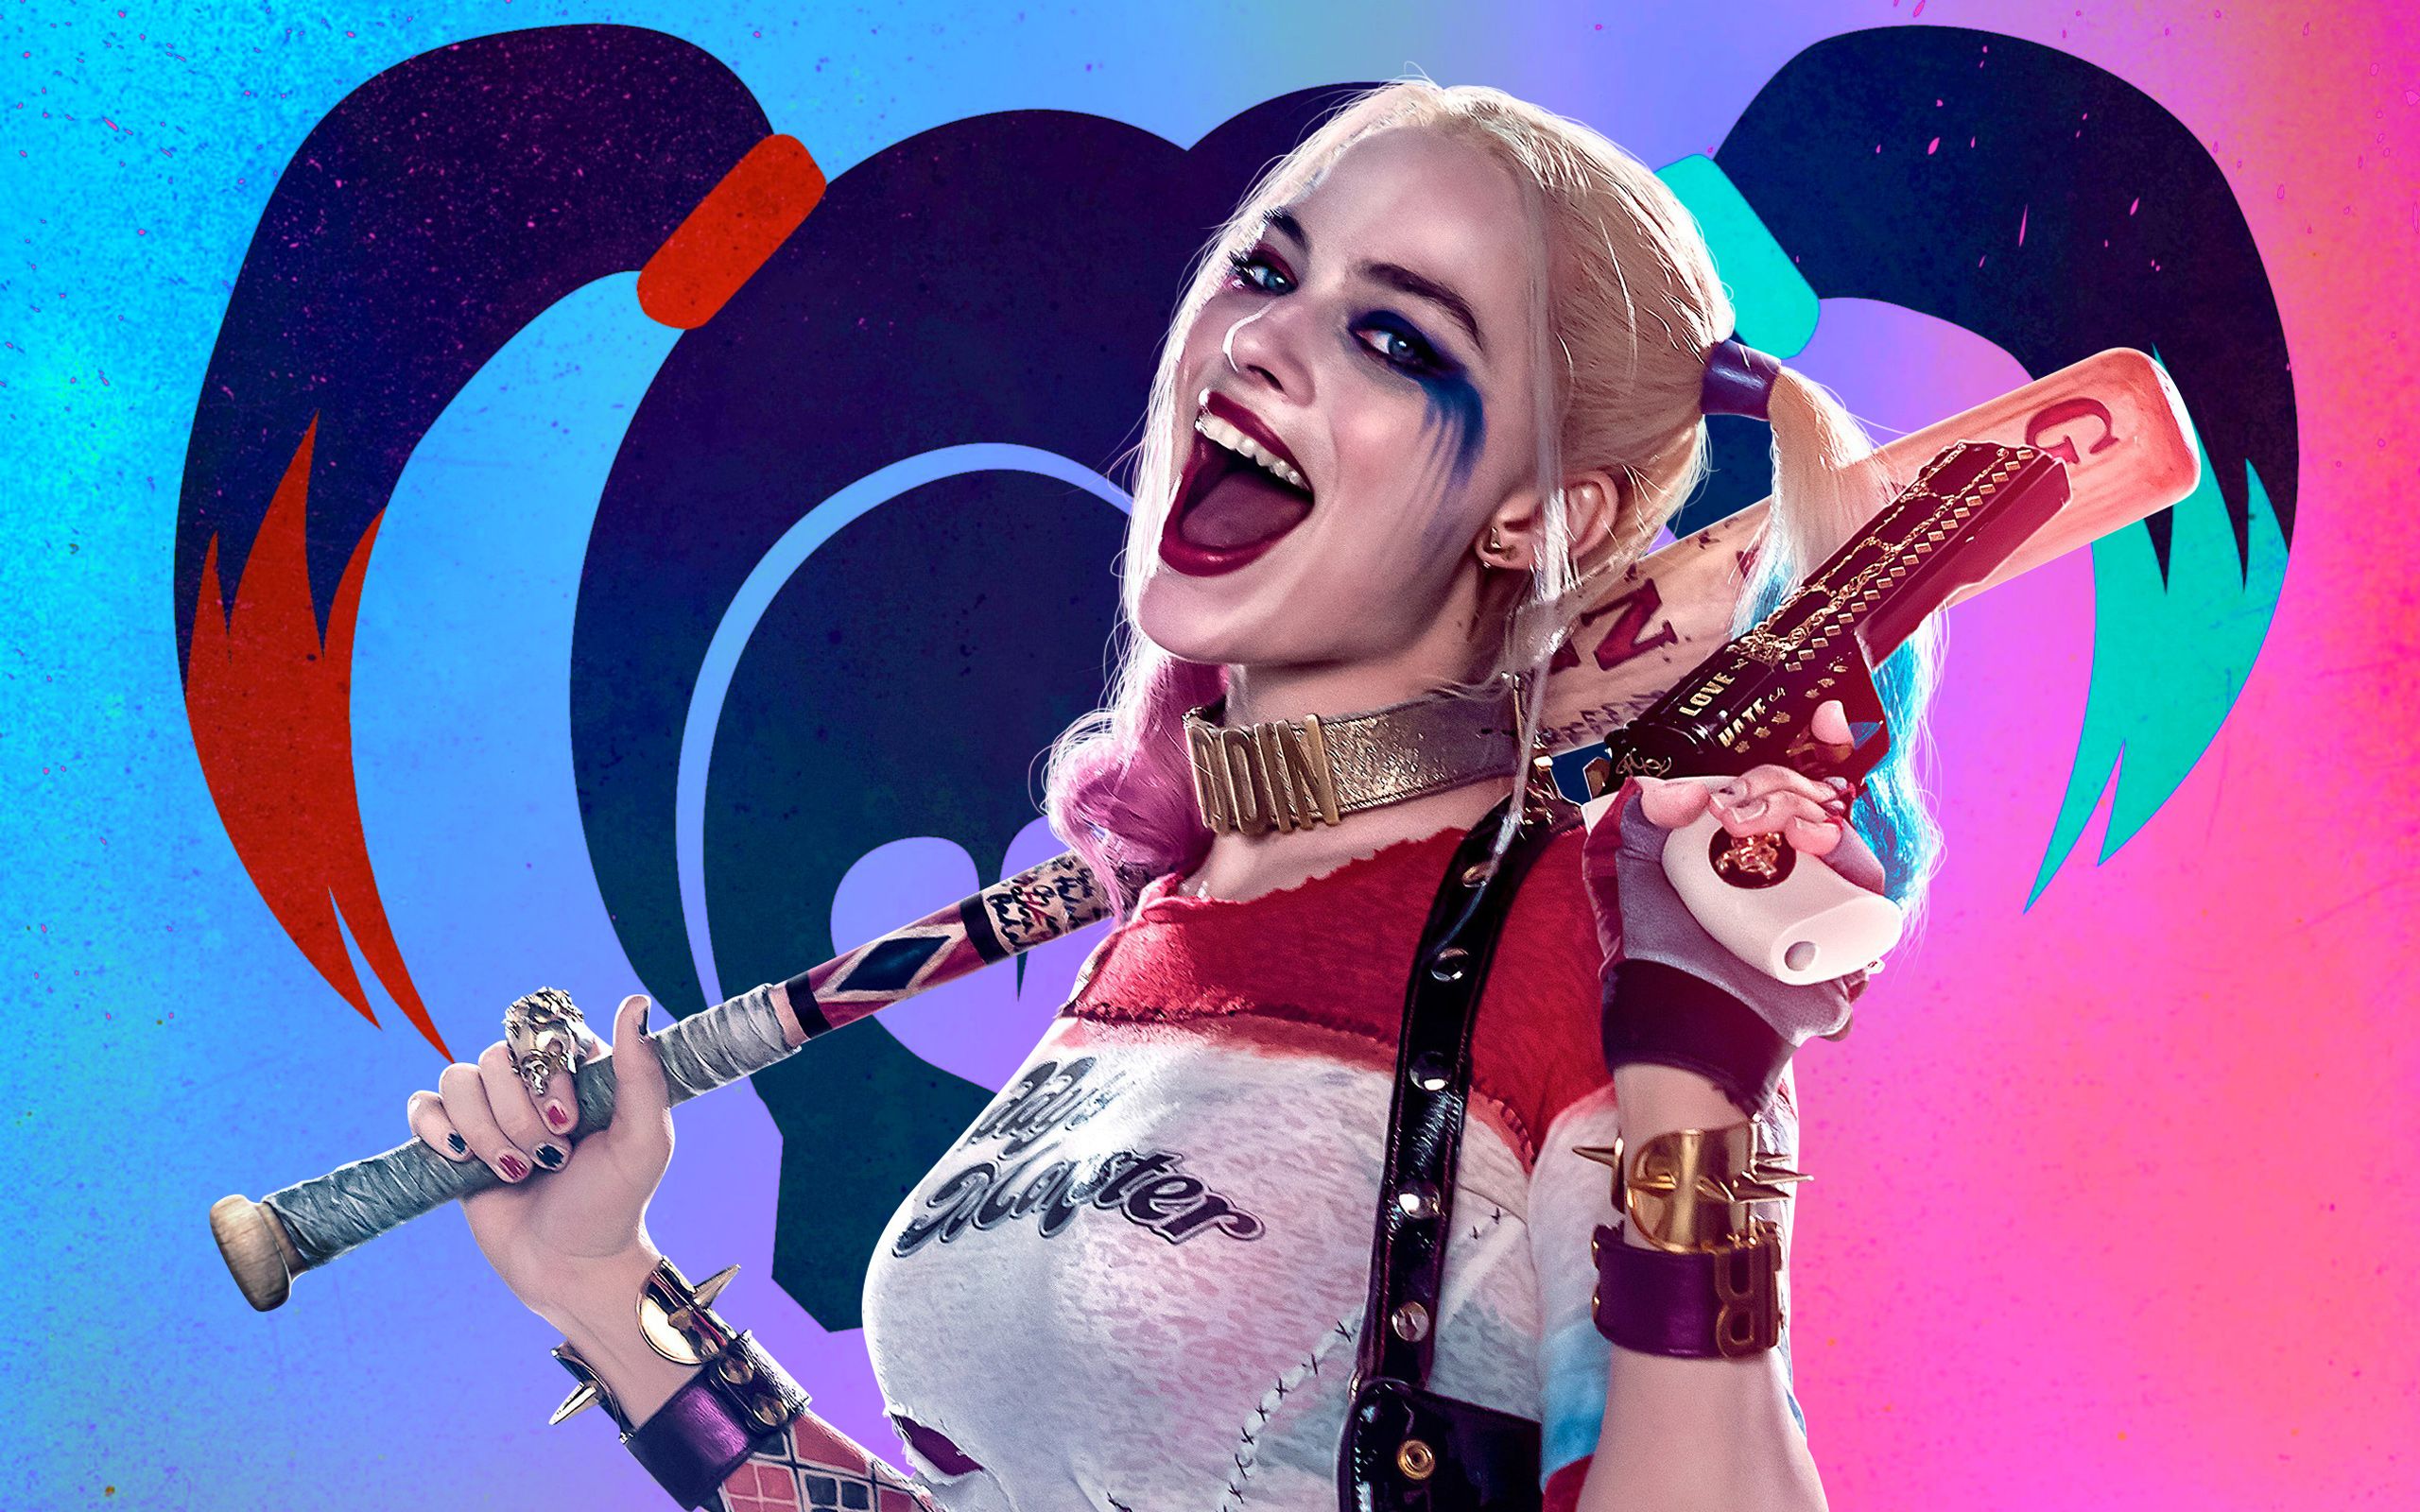 Suicide Squad Harley Quinn Desktop Wallpaper 1151 2560x1600 px